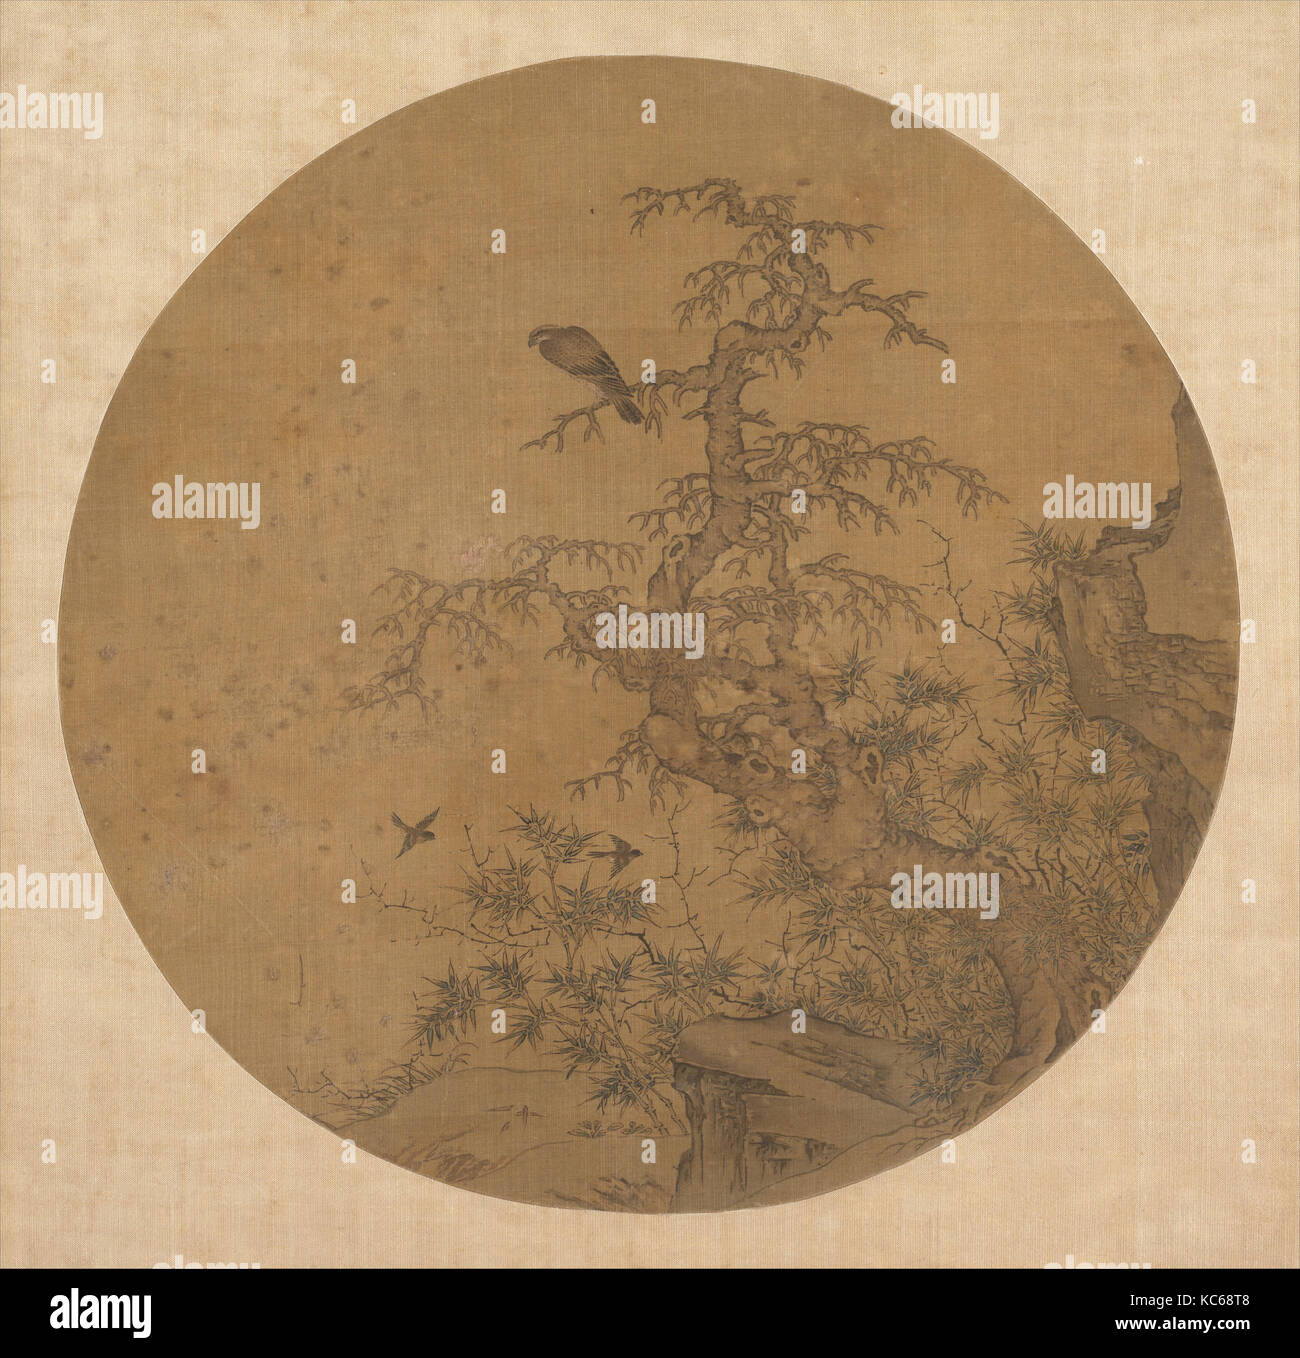 元/明 佚名 古木竹禽圖 團扇, vecchio albero, bambù e uccelli, non identificato artista cinese, tardo 14th-inizio del XV secolo Foto Stock